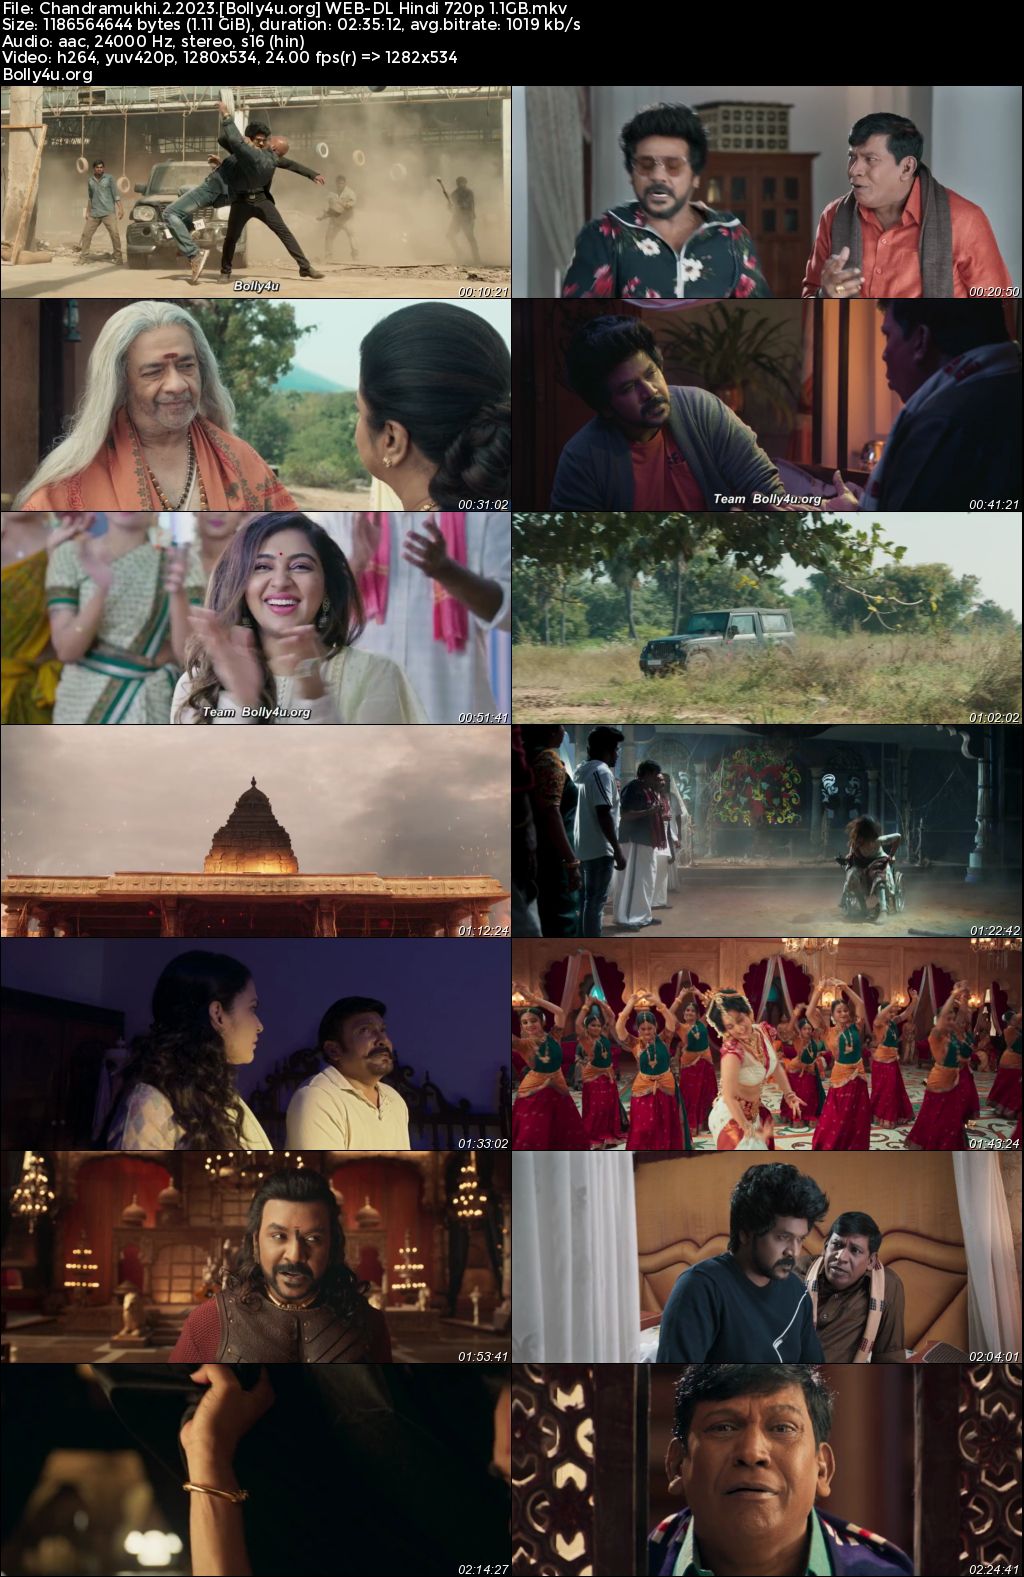 Chandramukhi 2 2023 WEB-DL Hindi Dubbed ORG Full Movie Download 1080p 720p 480p